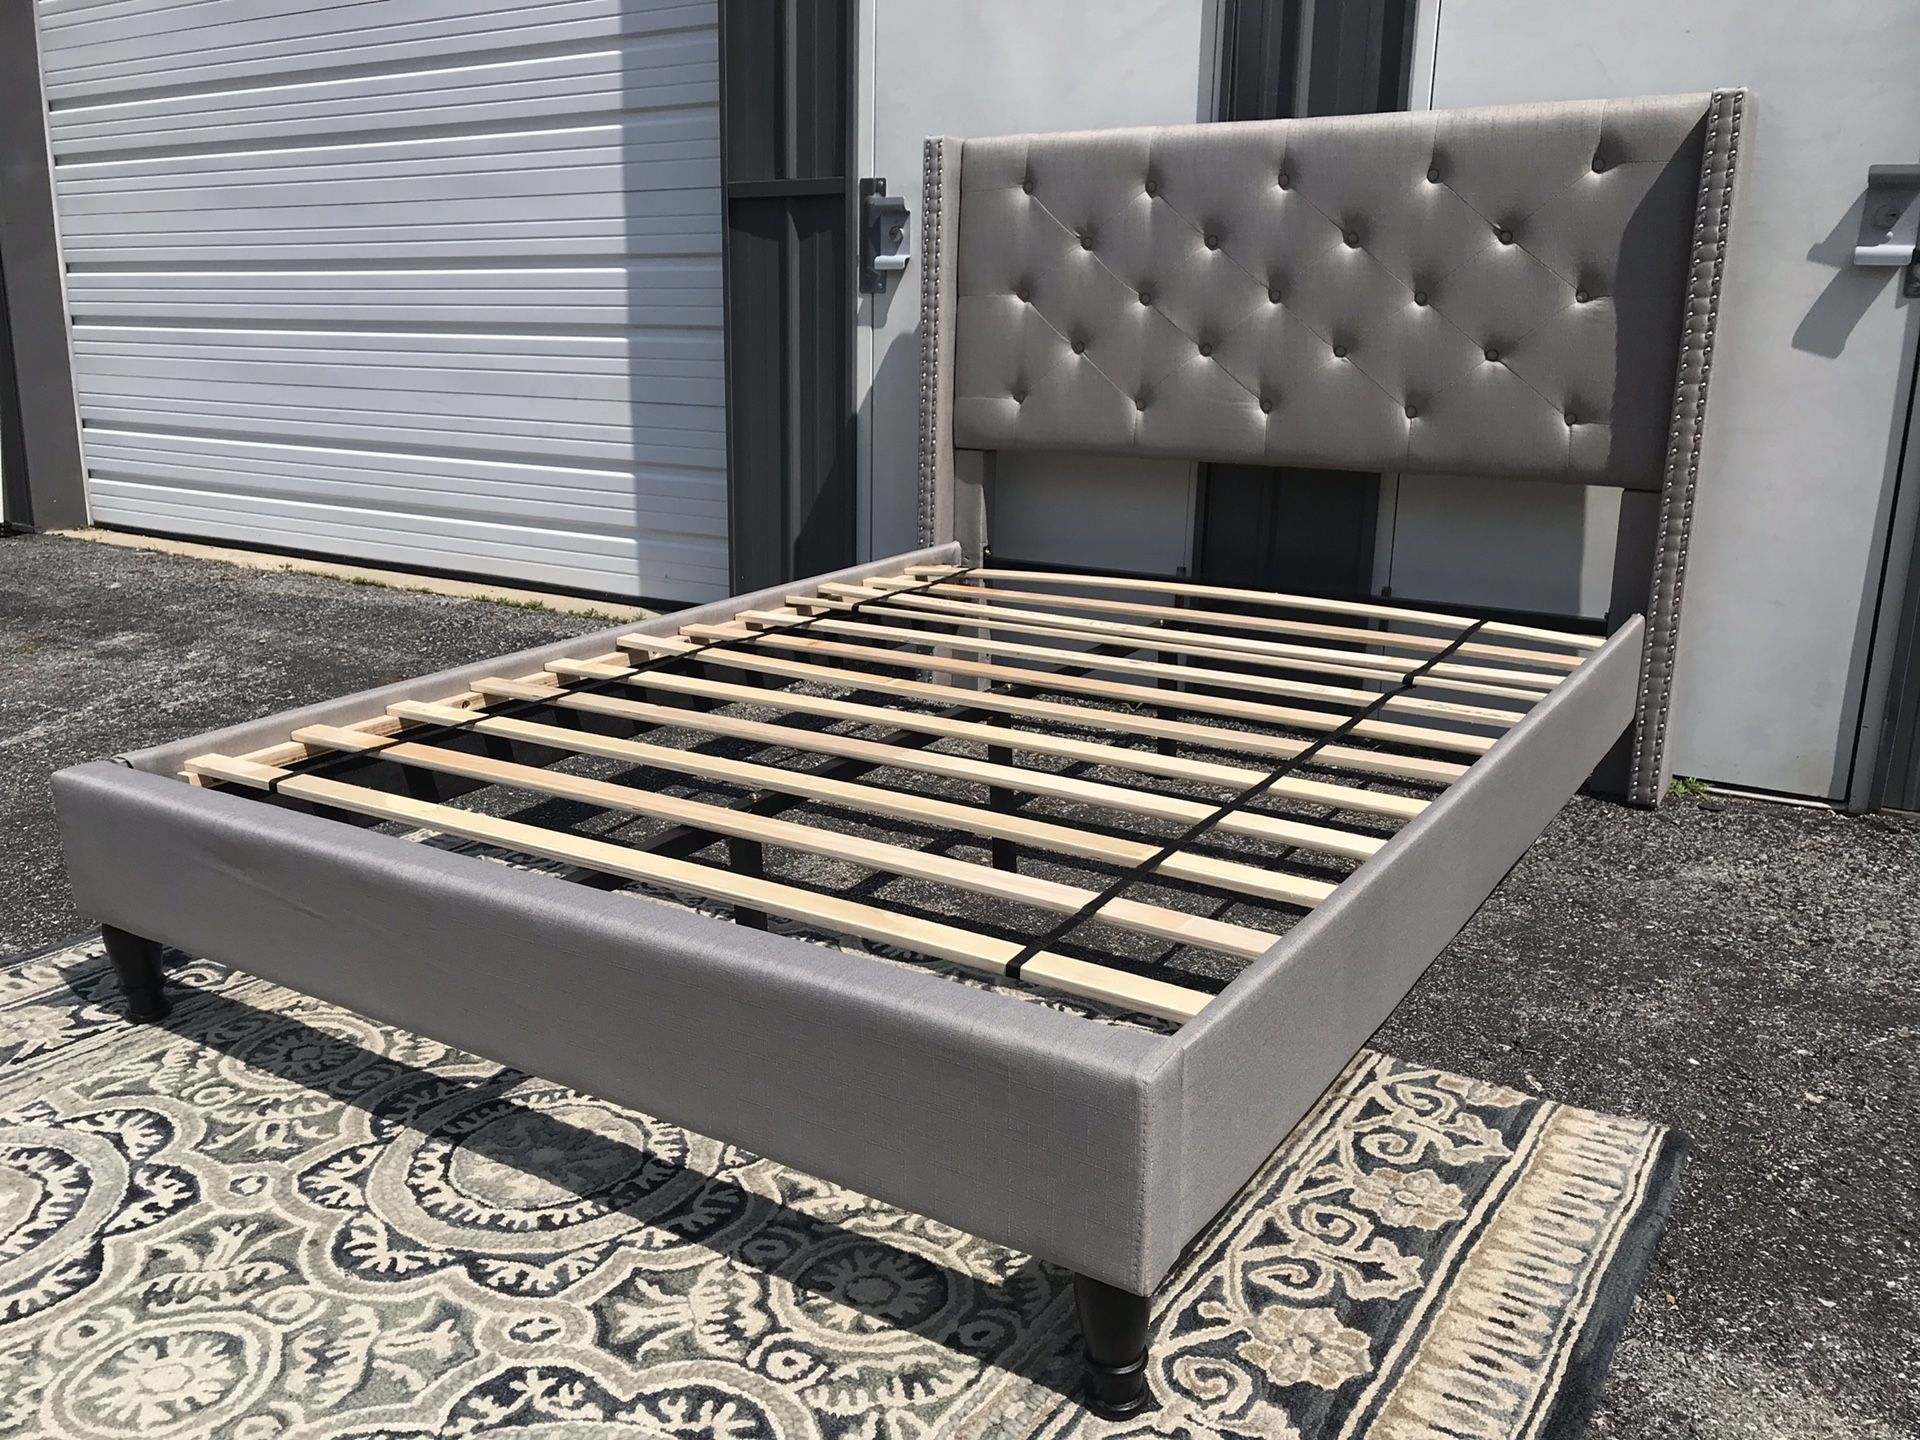 New platform bed frame FULL $200 QUEEN $240